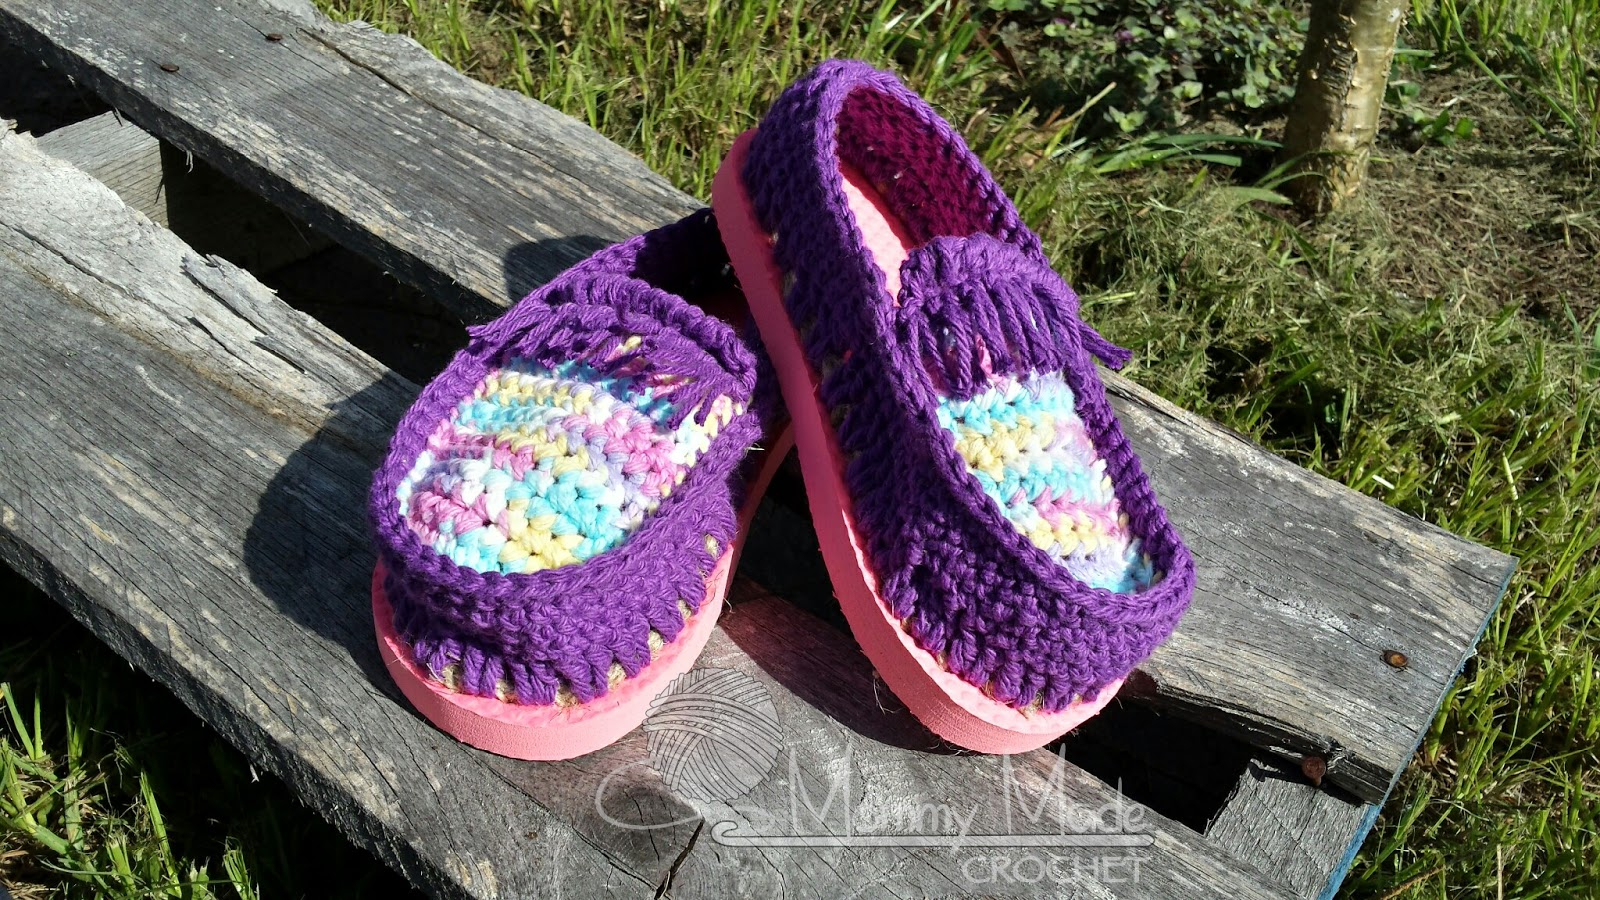 Moccasin Crochet Pattern Crochet Patterns Galore Cotton Moccasin Shoes